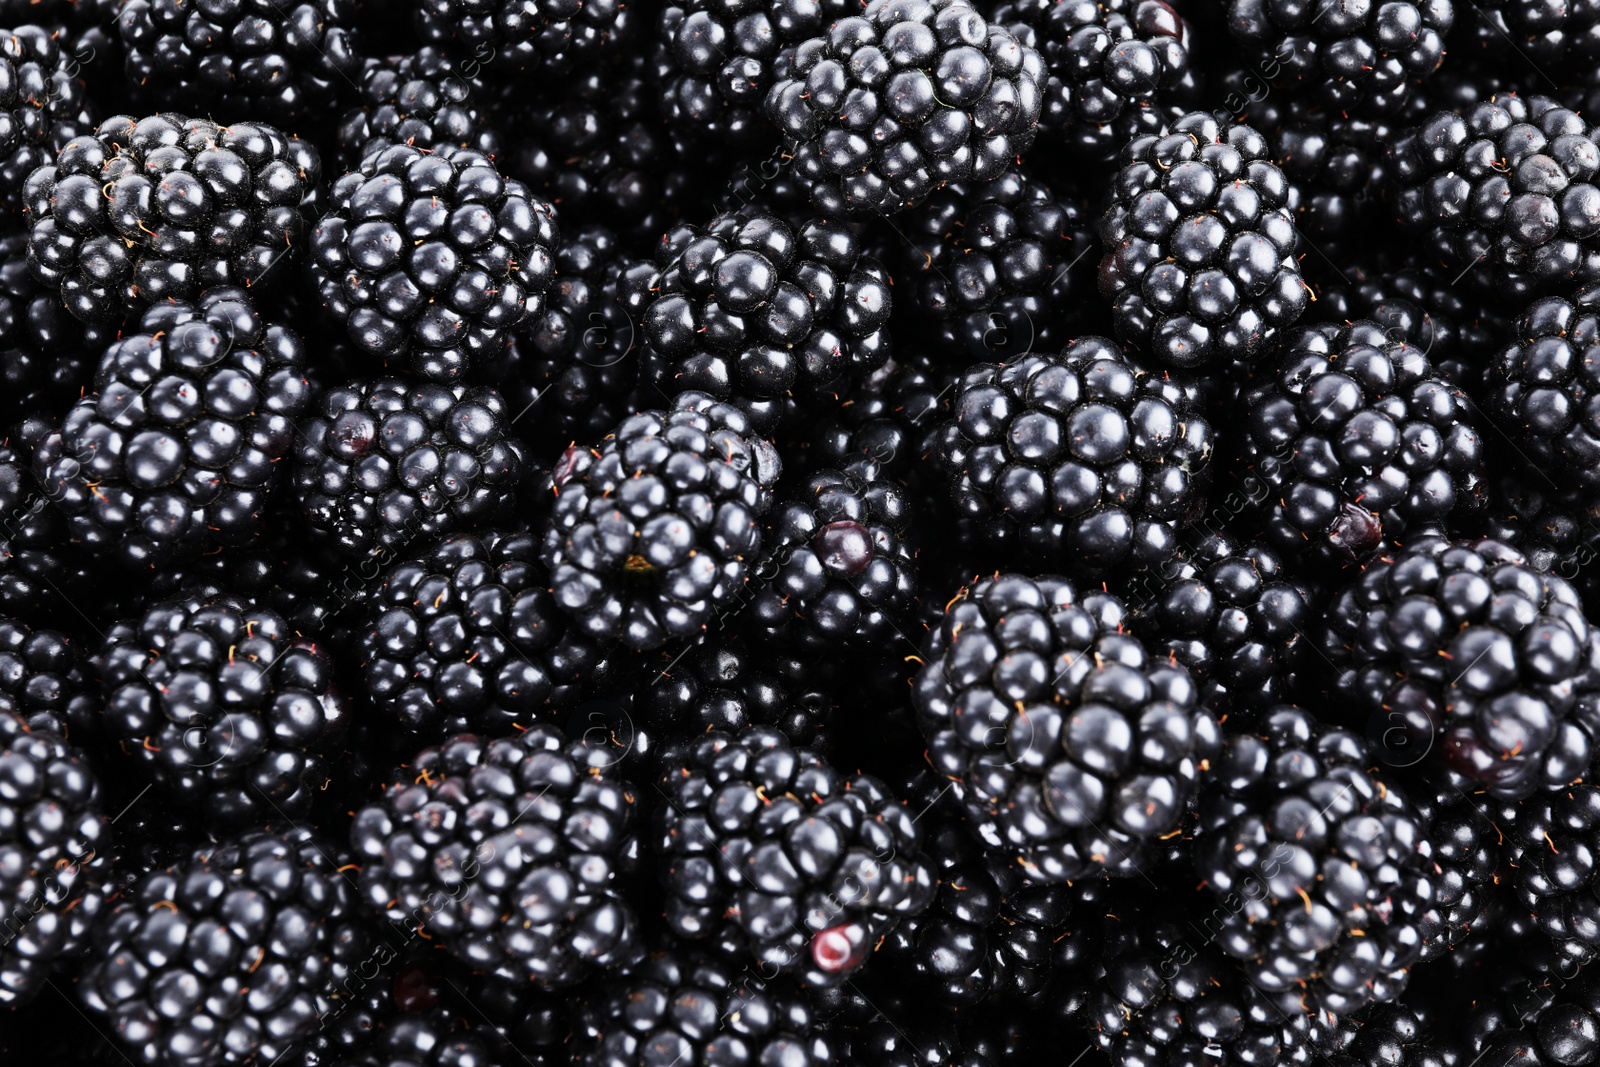 Photo of Tasty ripe blackberries as background, top view